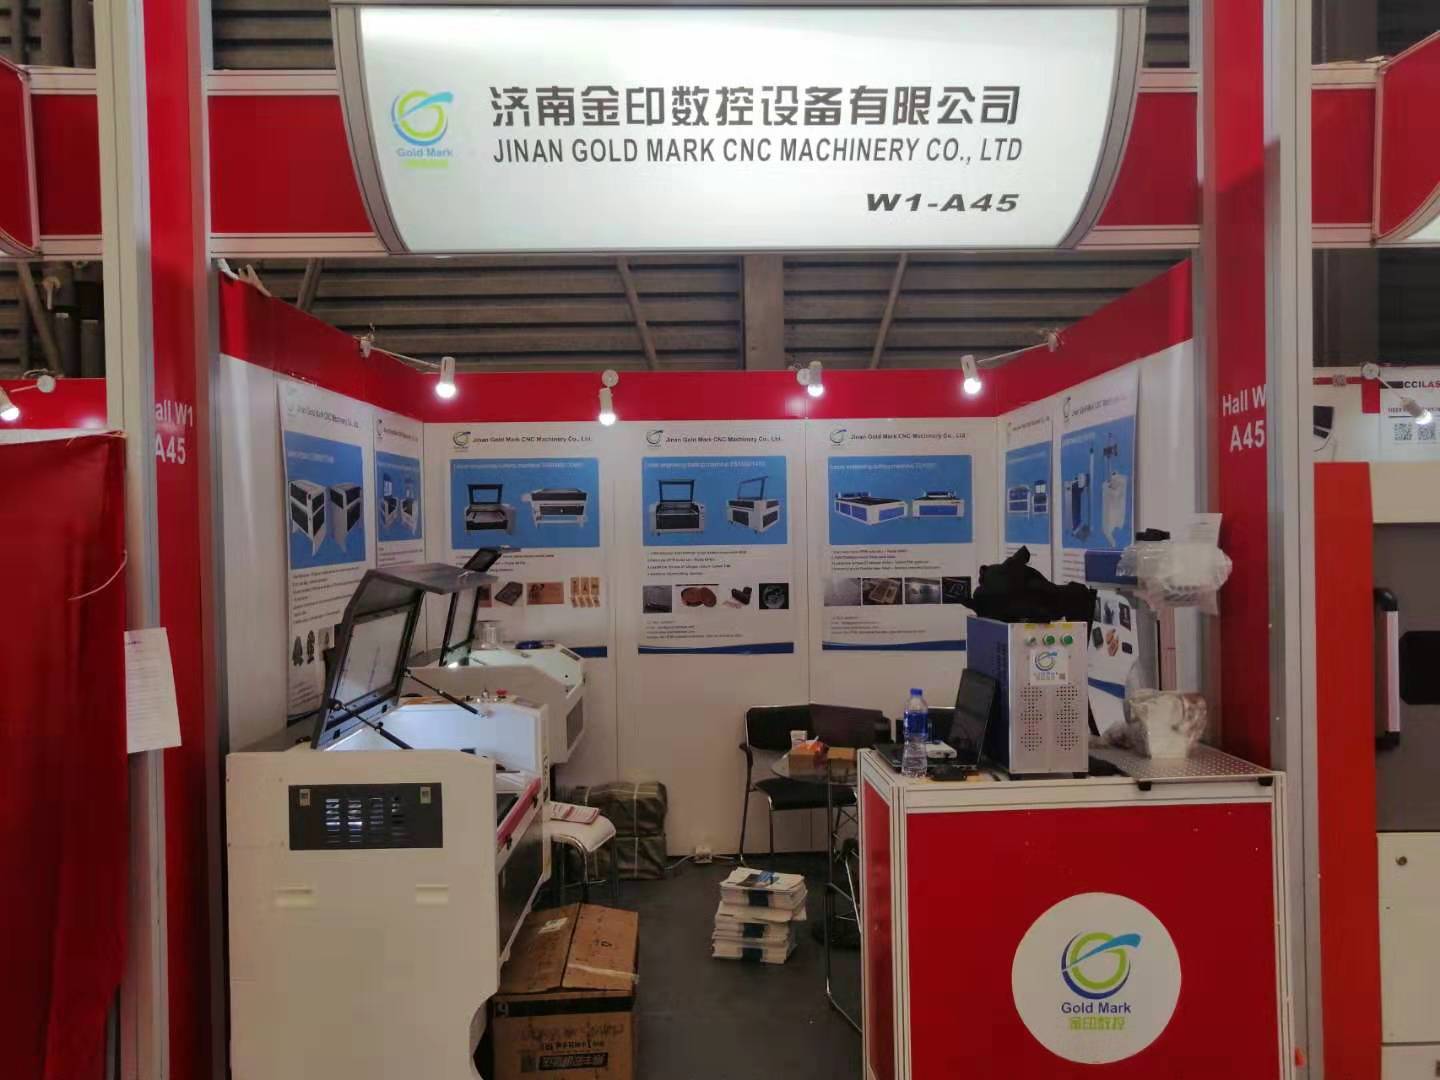 Jinan ora marko cnc machiner co.,ltd.kun stelproduktoj rivelis la ekspozicion pri reklama emblemo SIGN CHINA 2019.